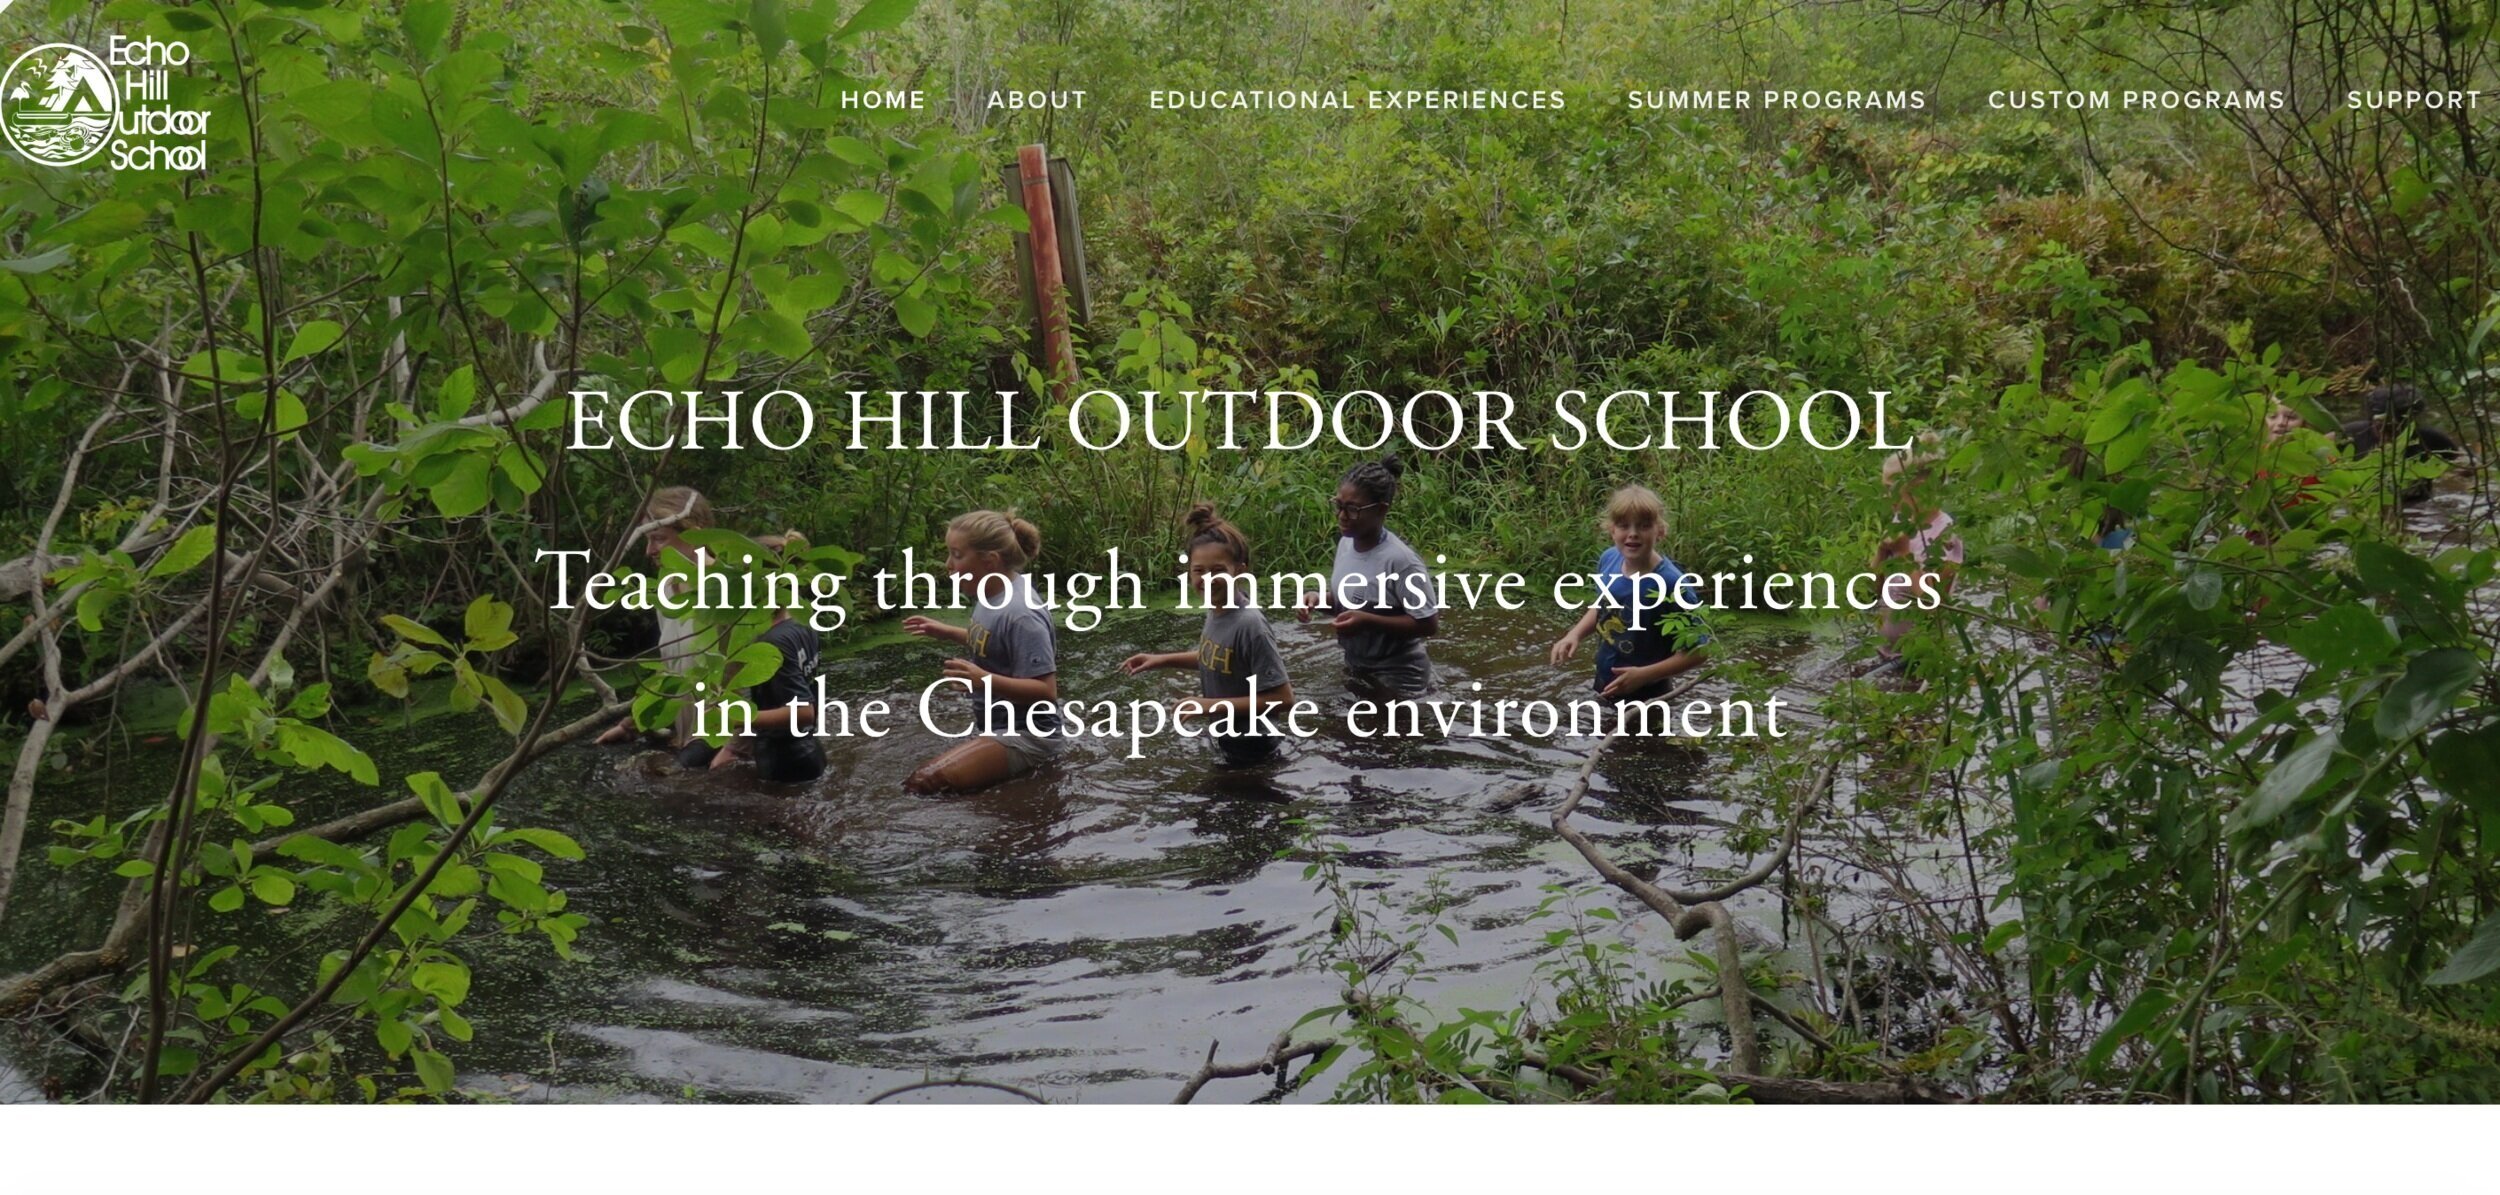 Echo Hill Outdoor School